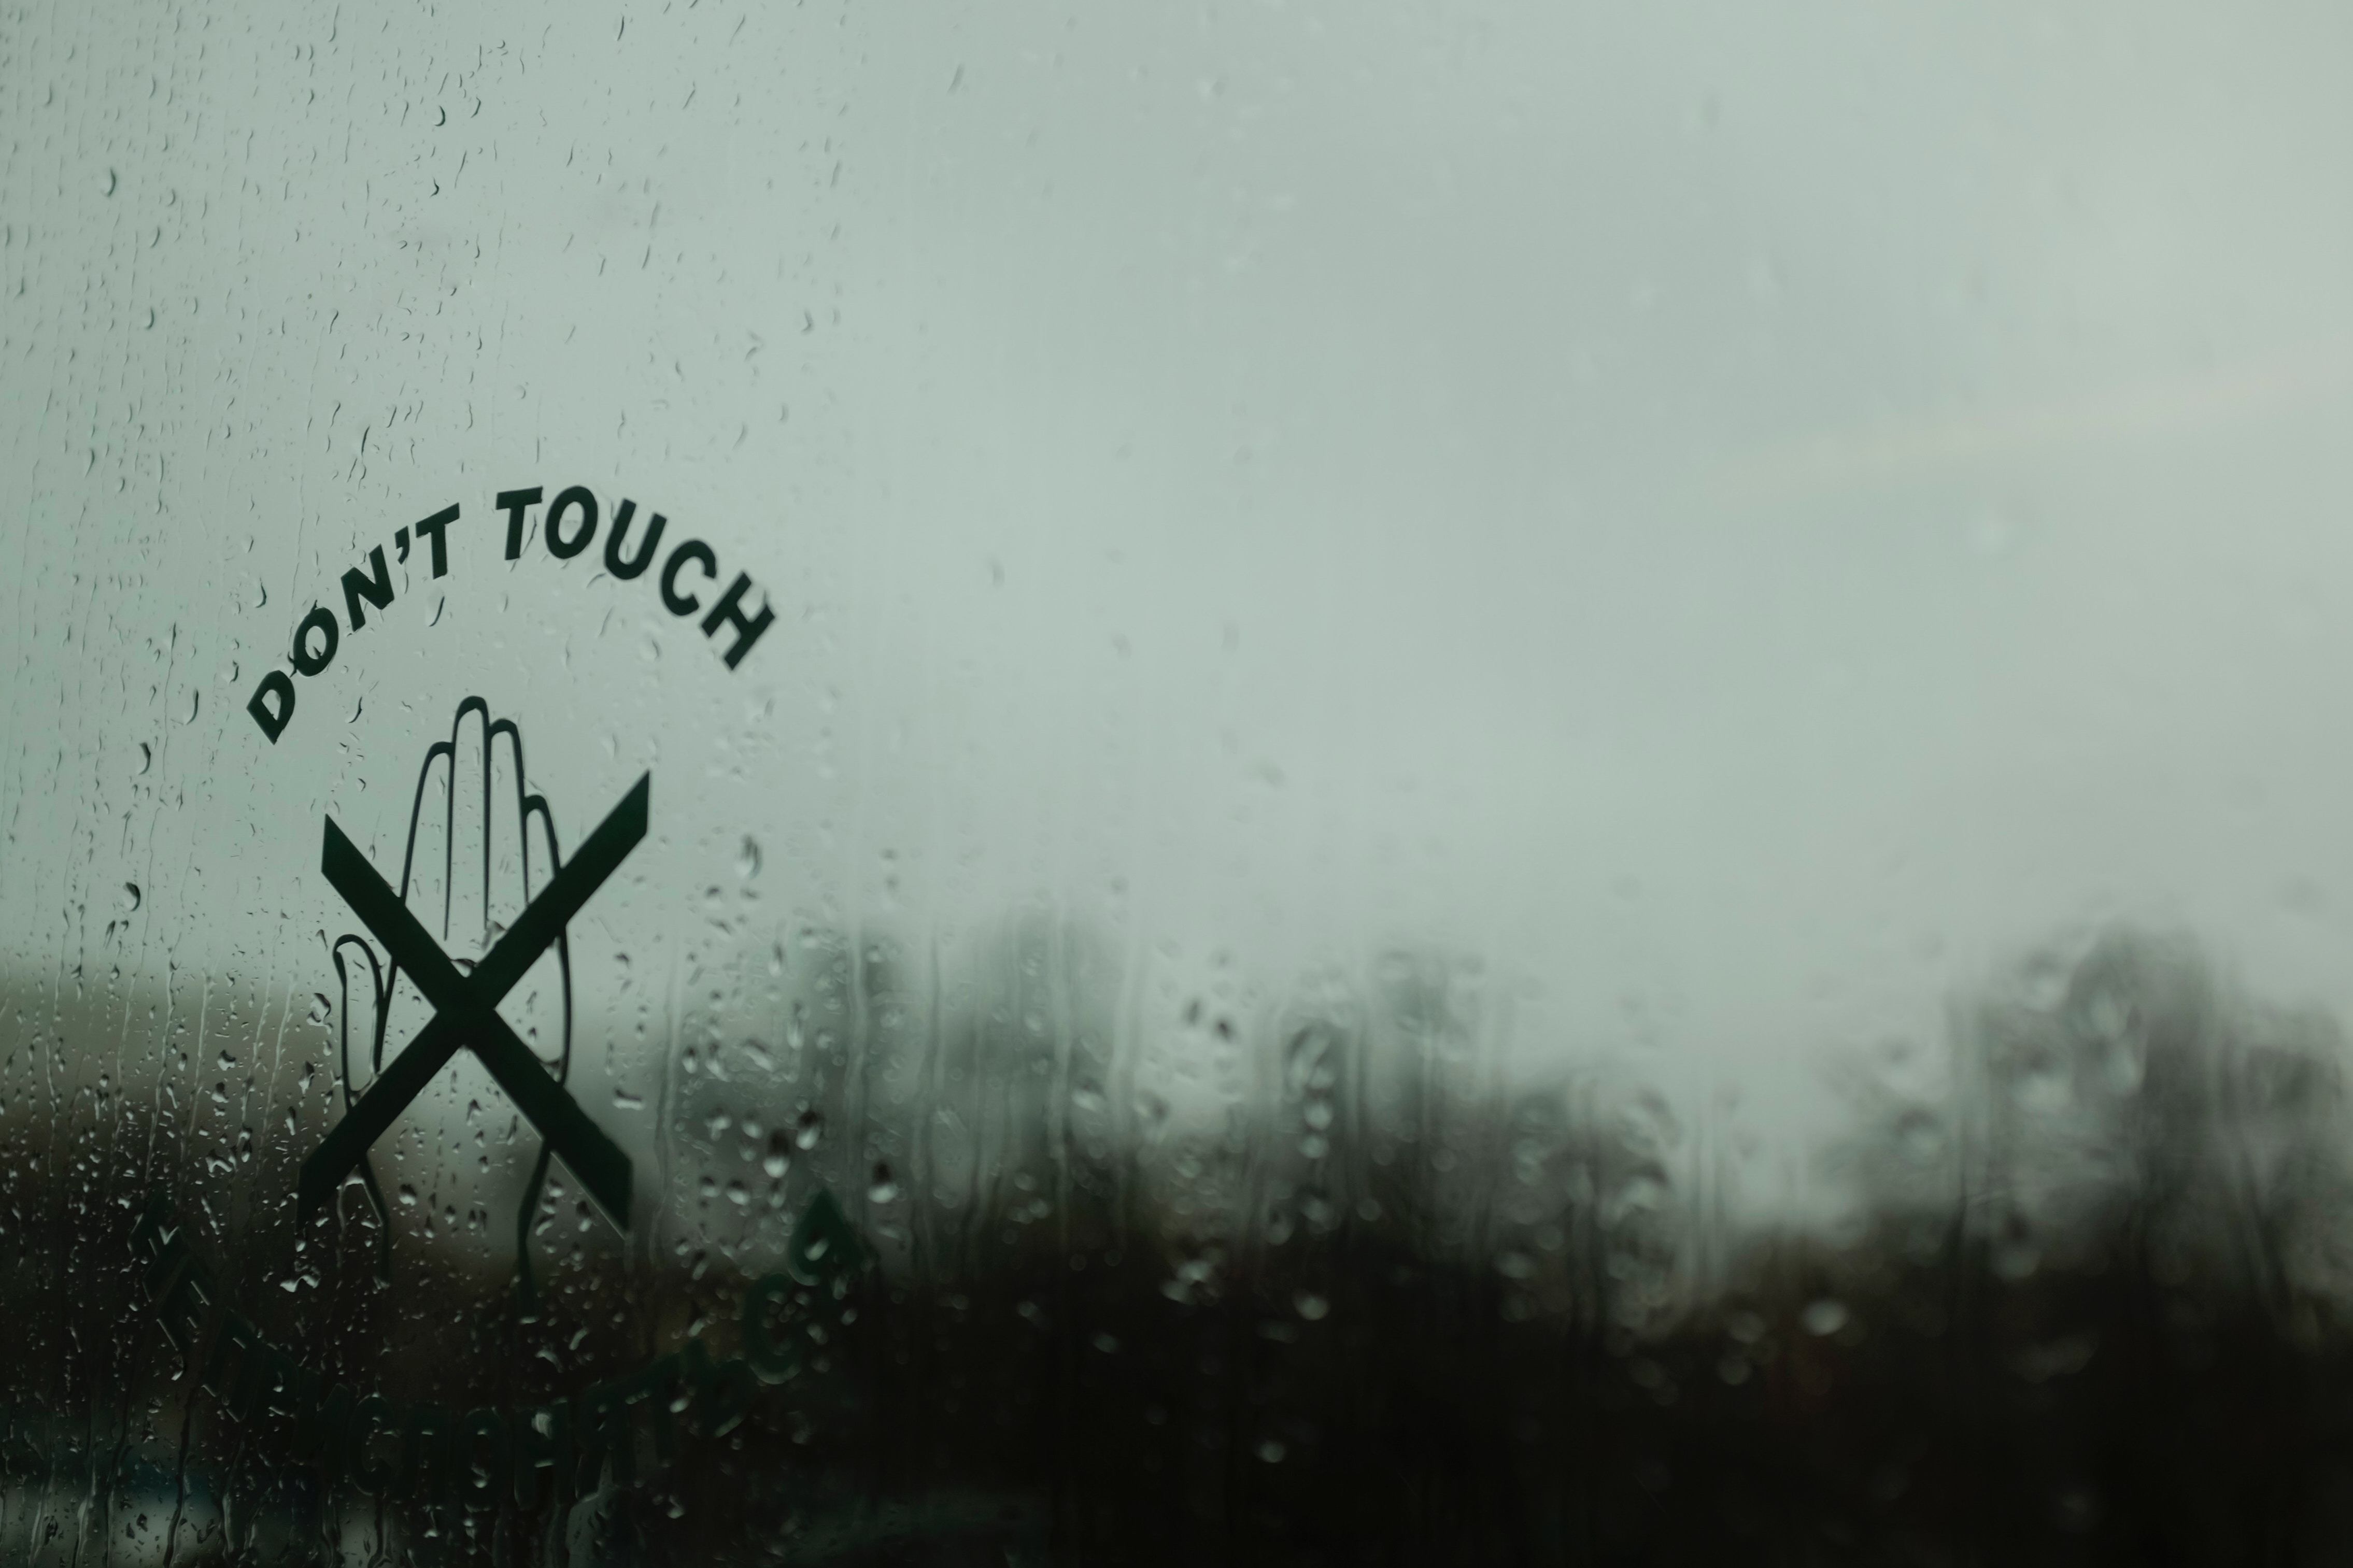 moisture, rain, drops, words, glass, inscription, touching, touch phone background